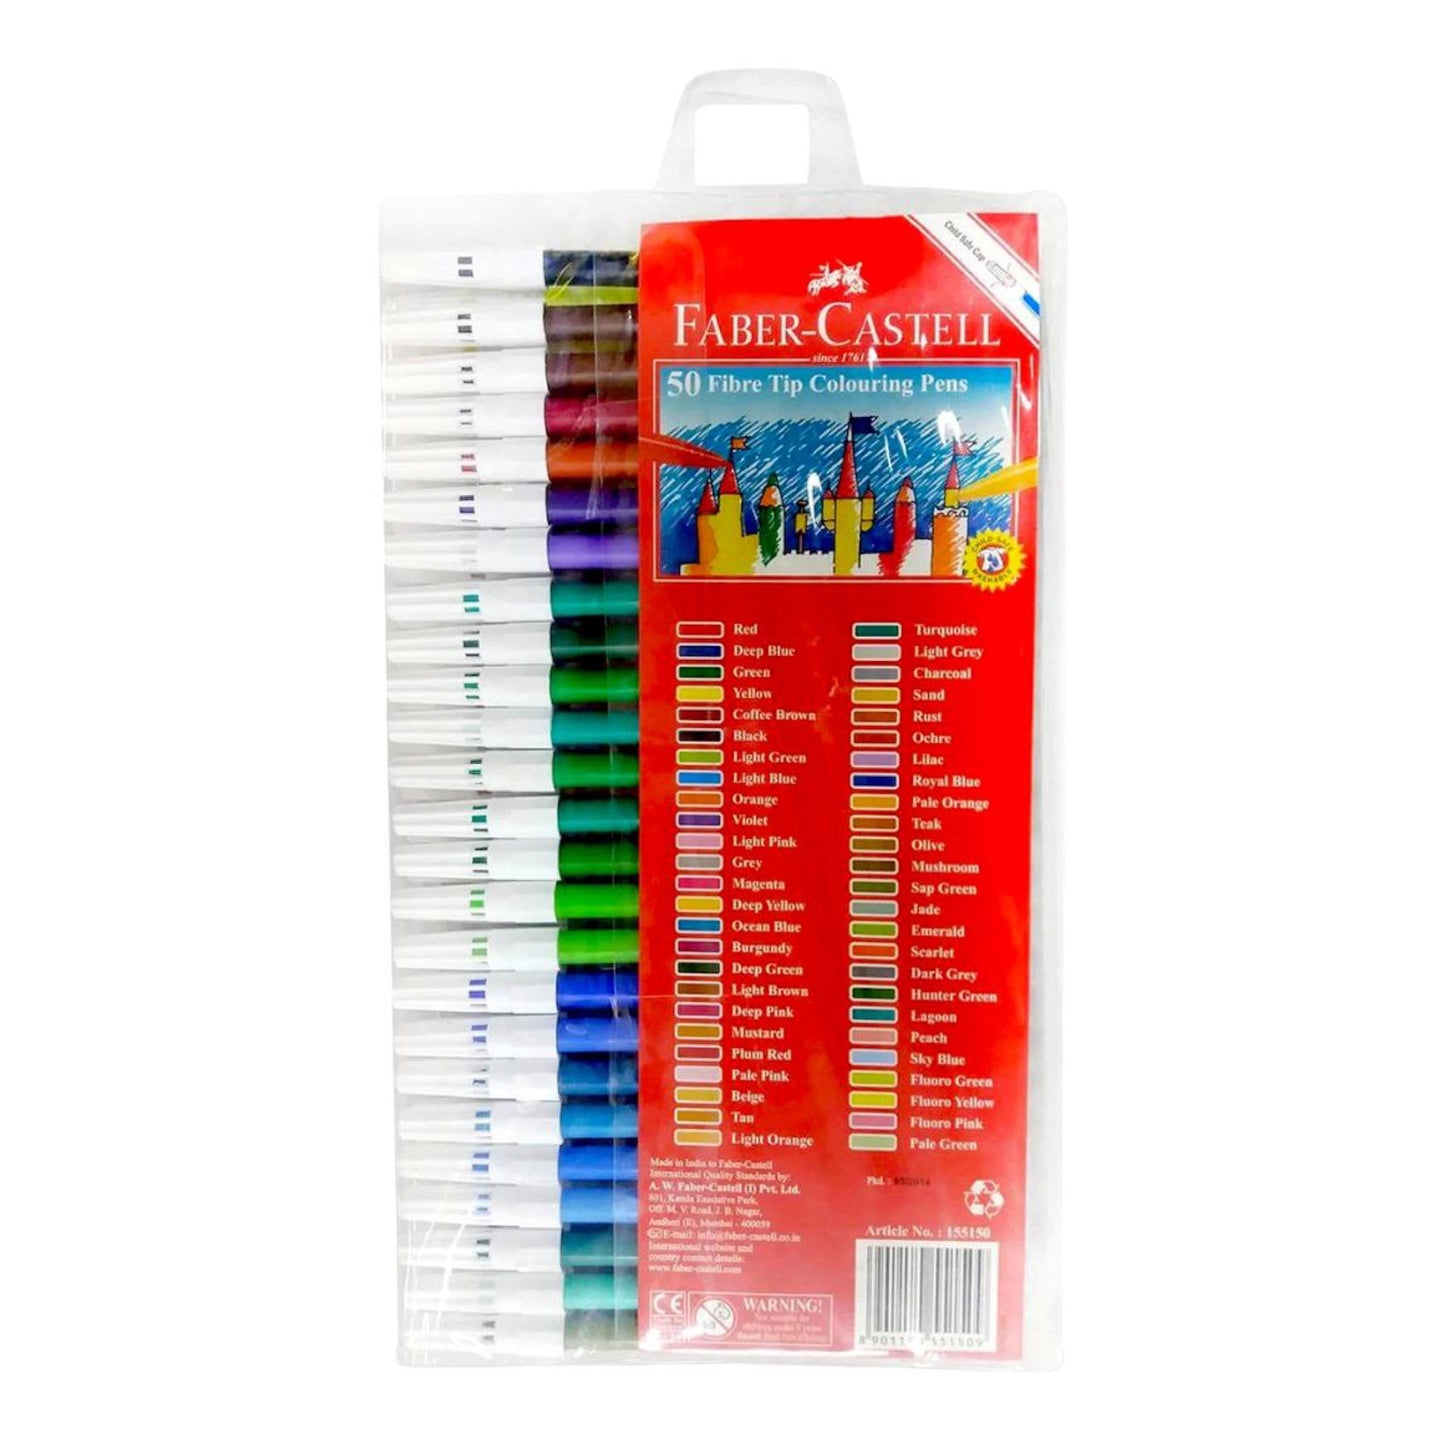 Faber Castell 50 colored markers || الوان شيني فيبر كاستل 50 لون